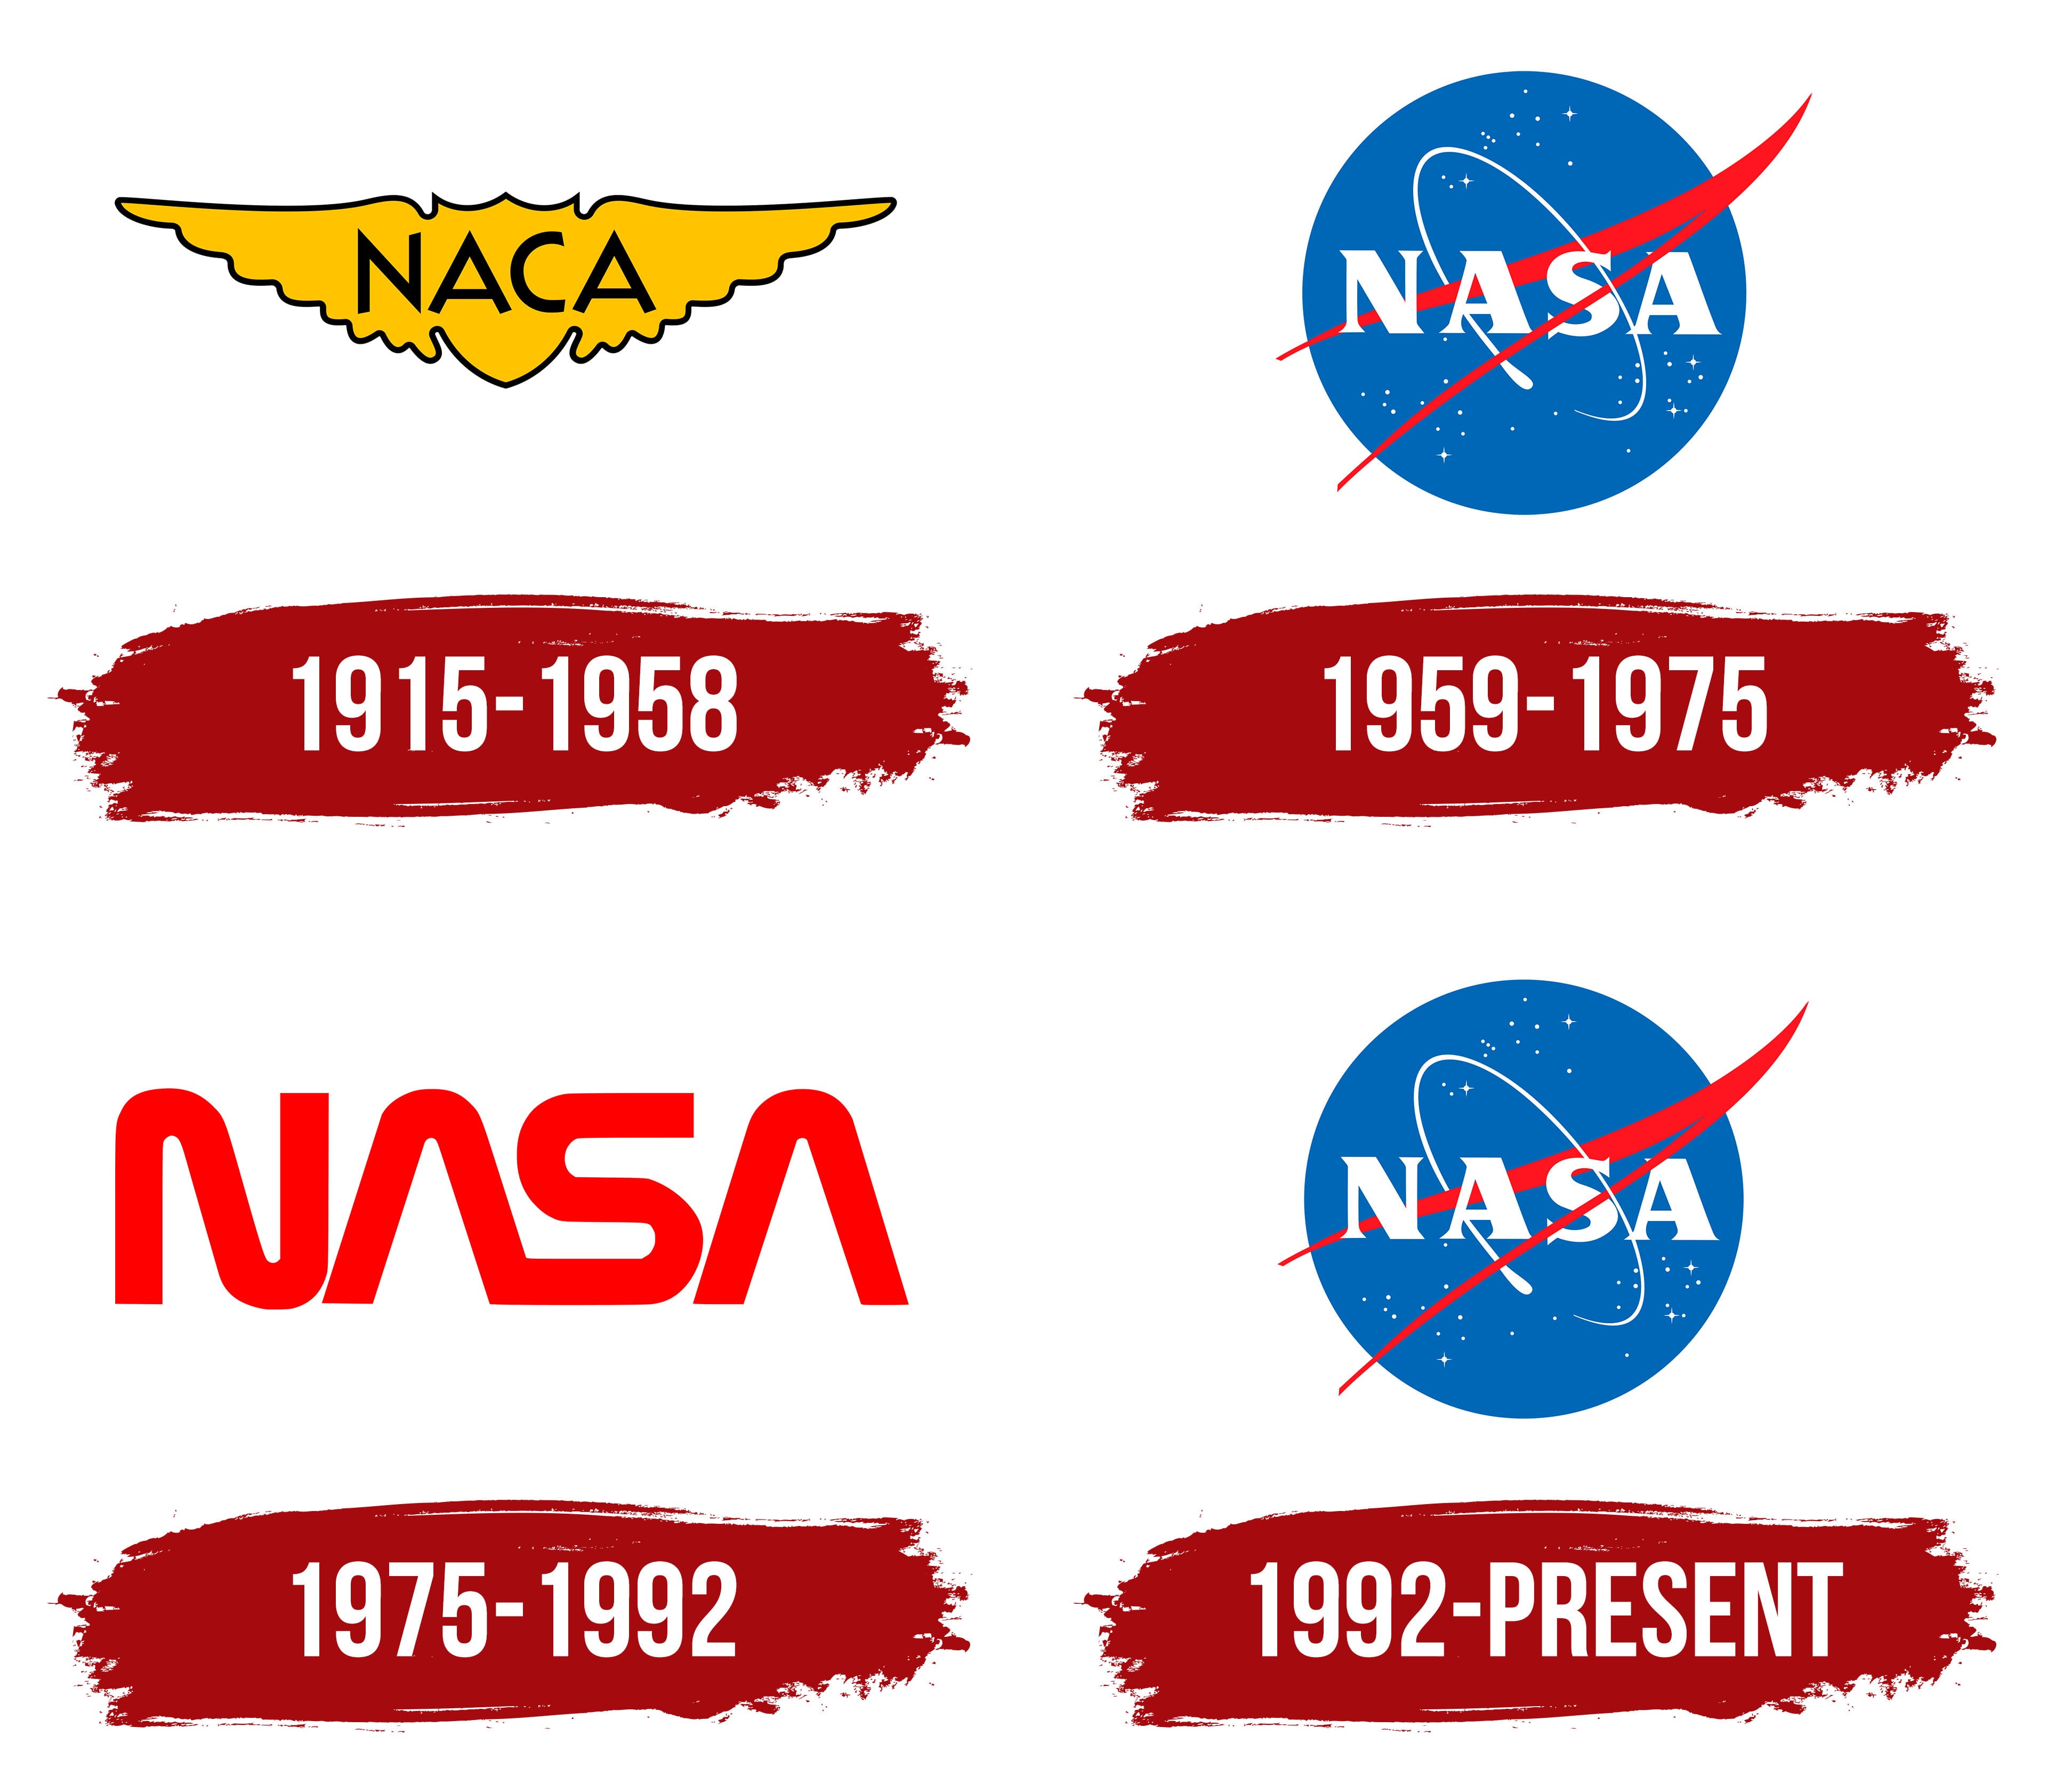 Nasa Logos Through The Years